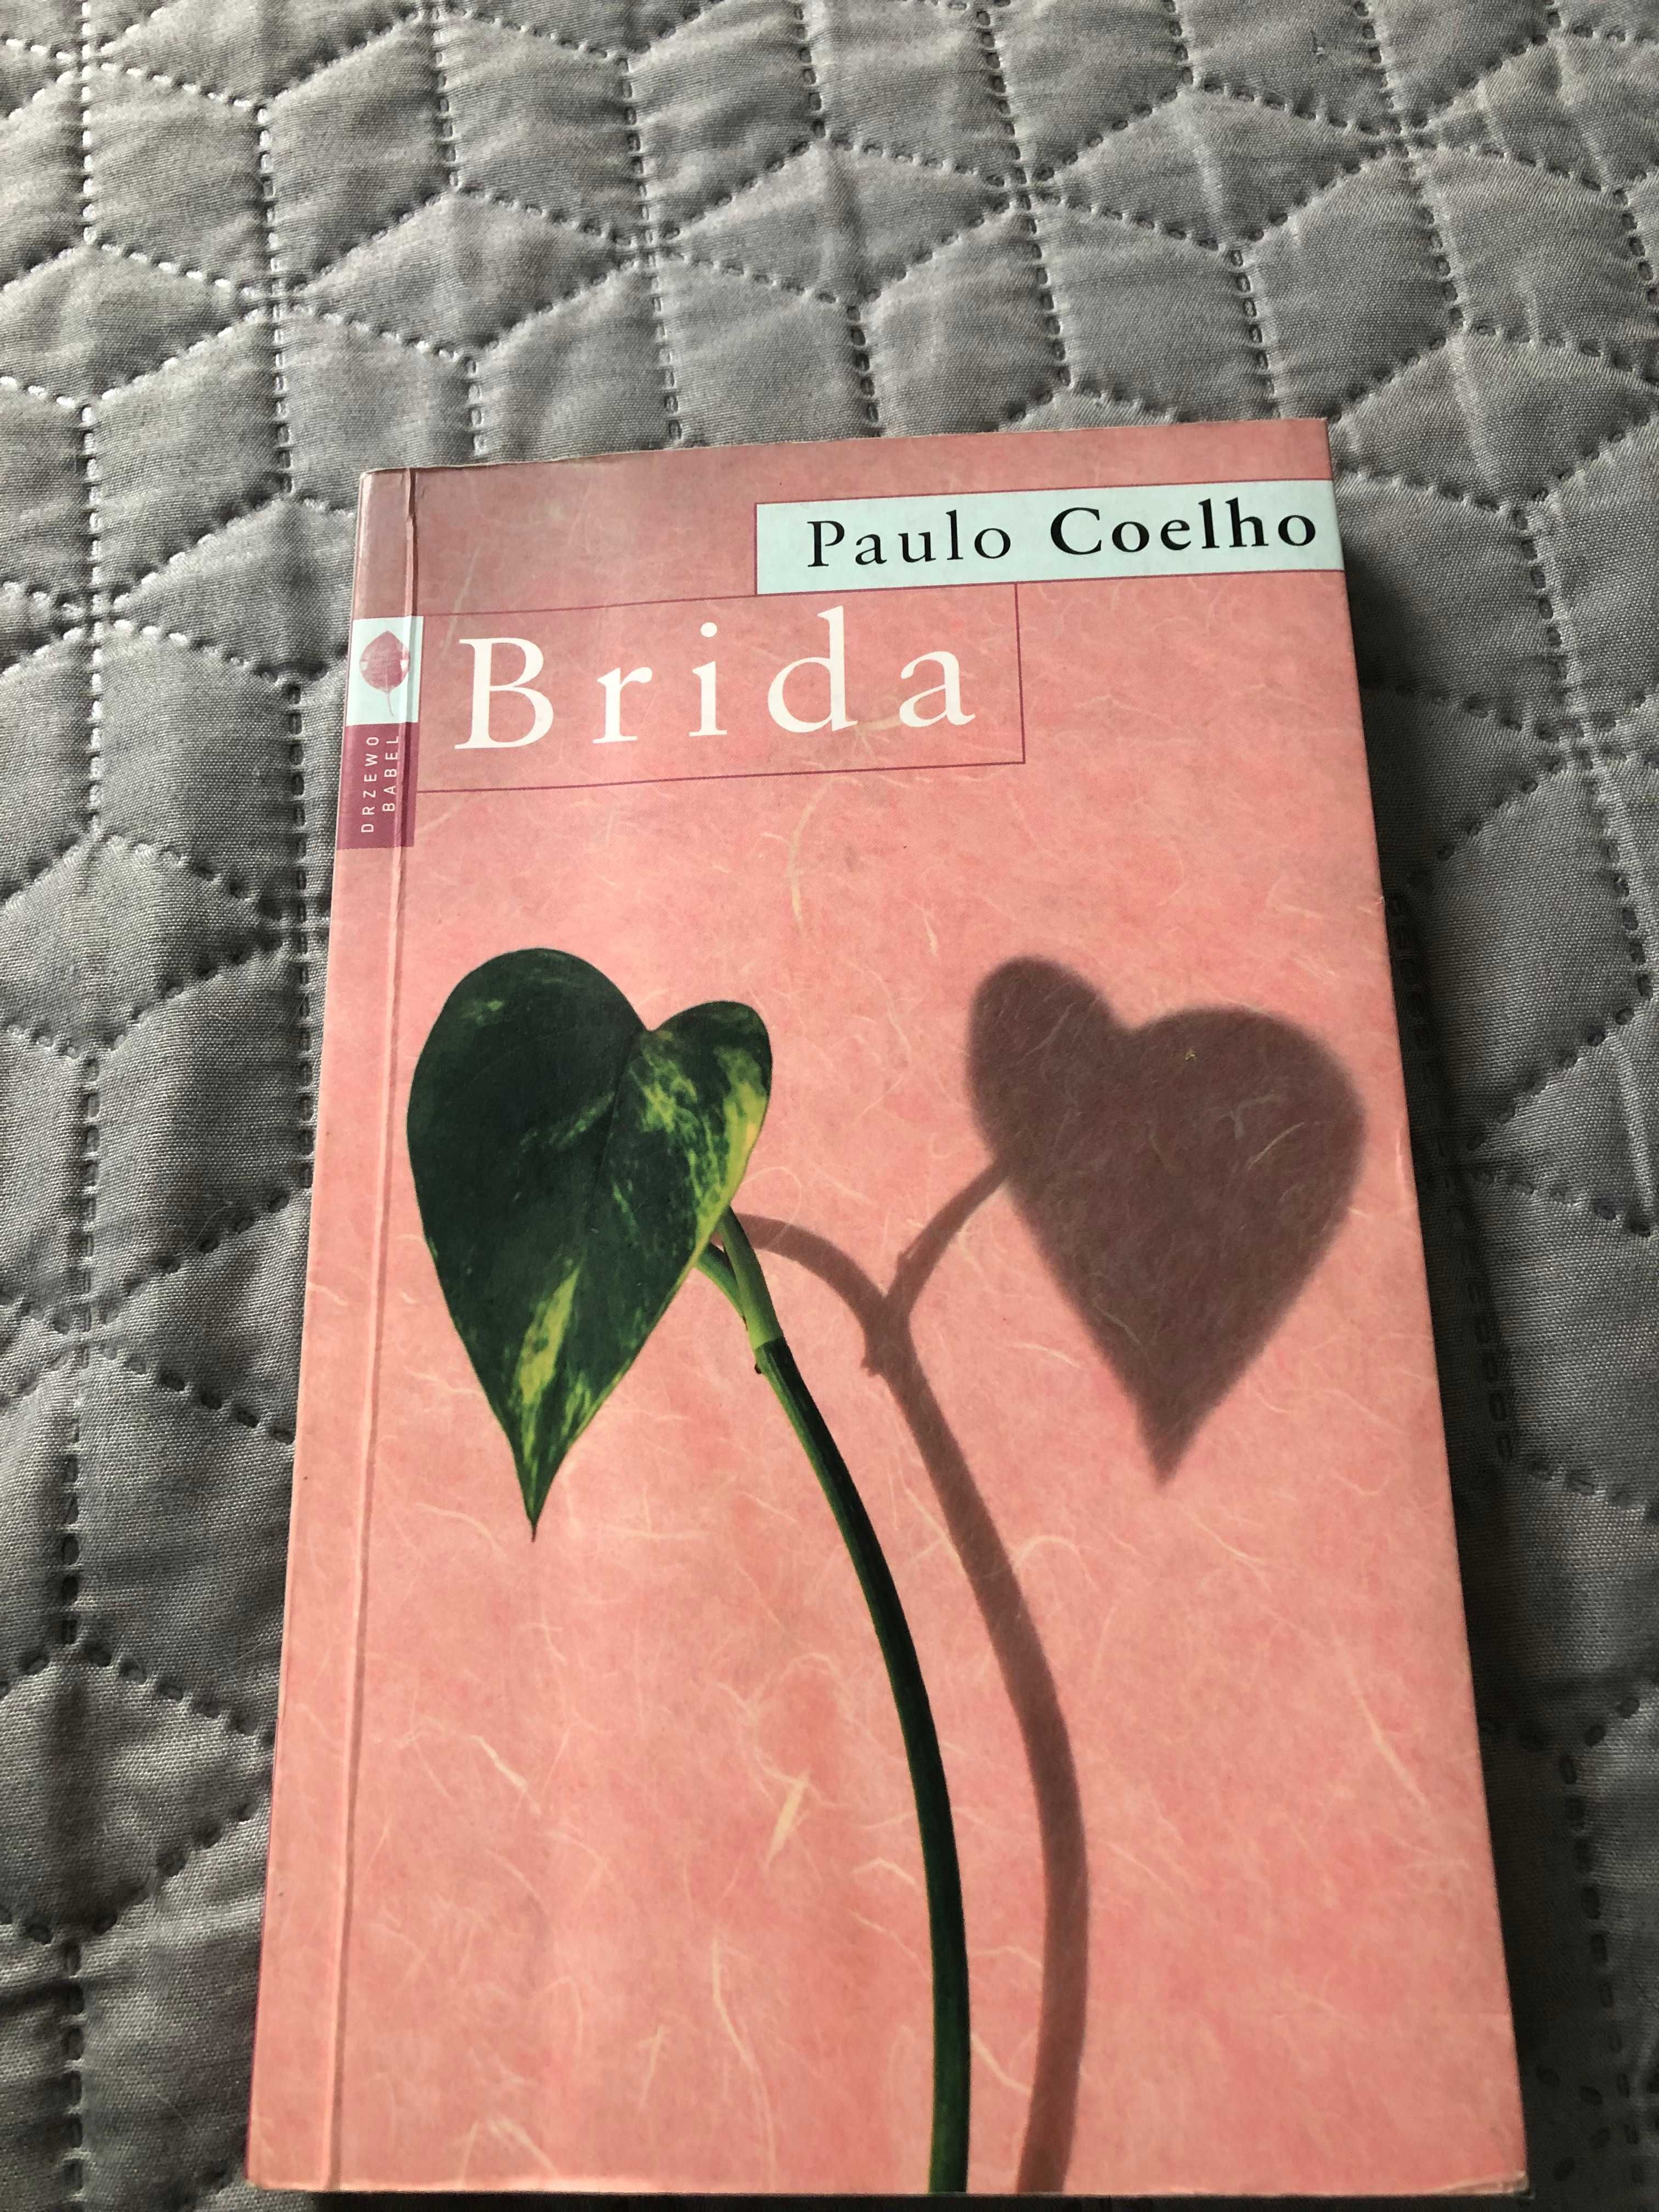 Książka Paulo Coelho "Brida"